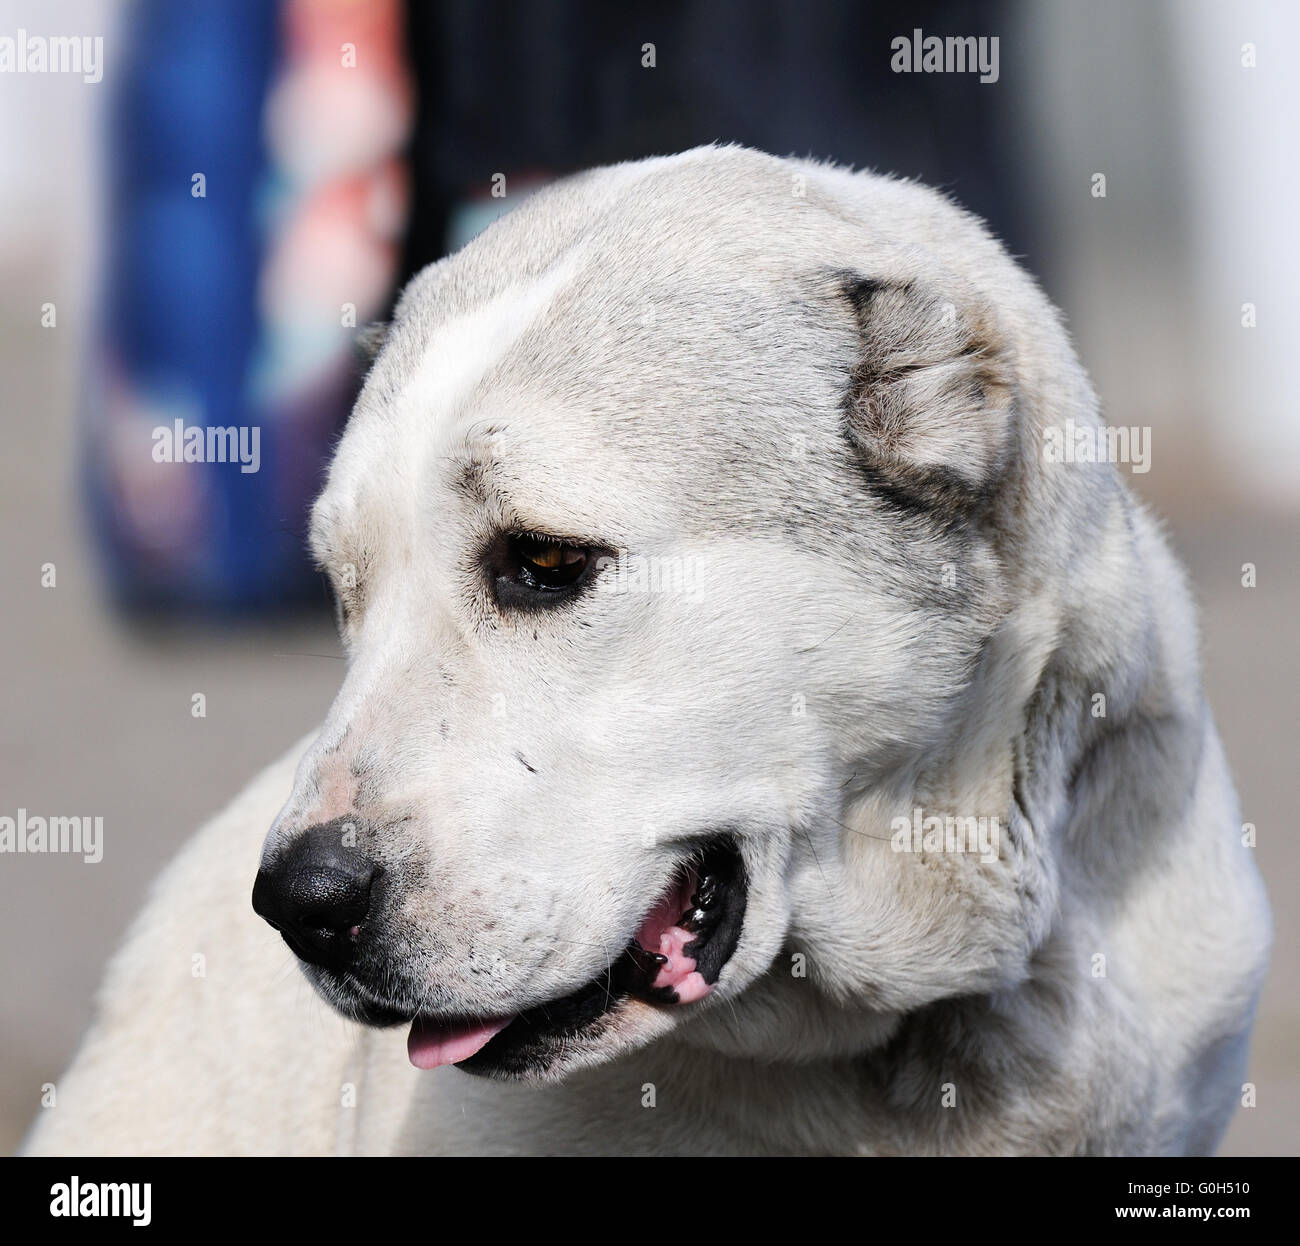 Big Asian Sheep dog portrait over blurry background Stock Photo